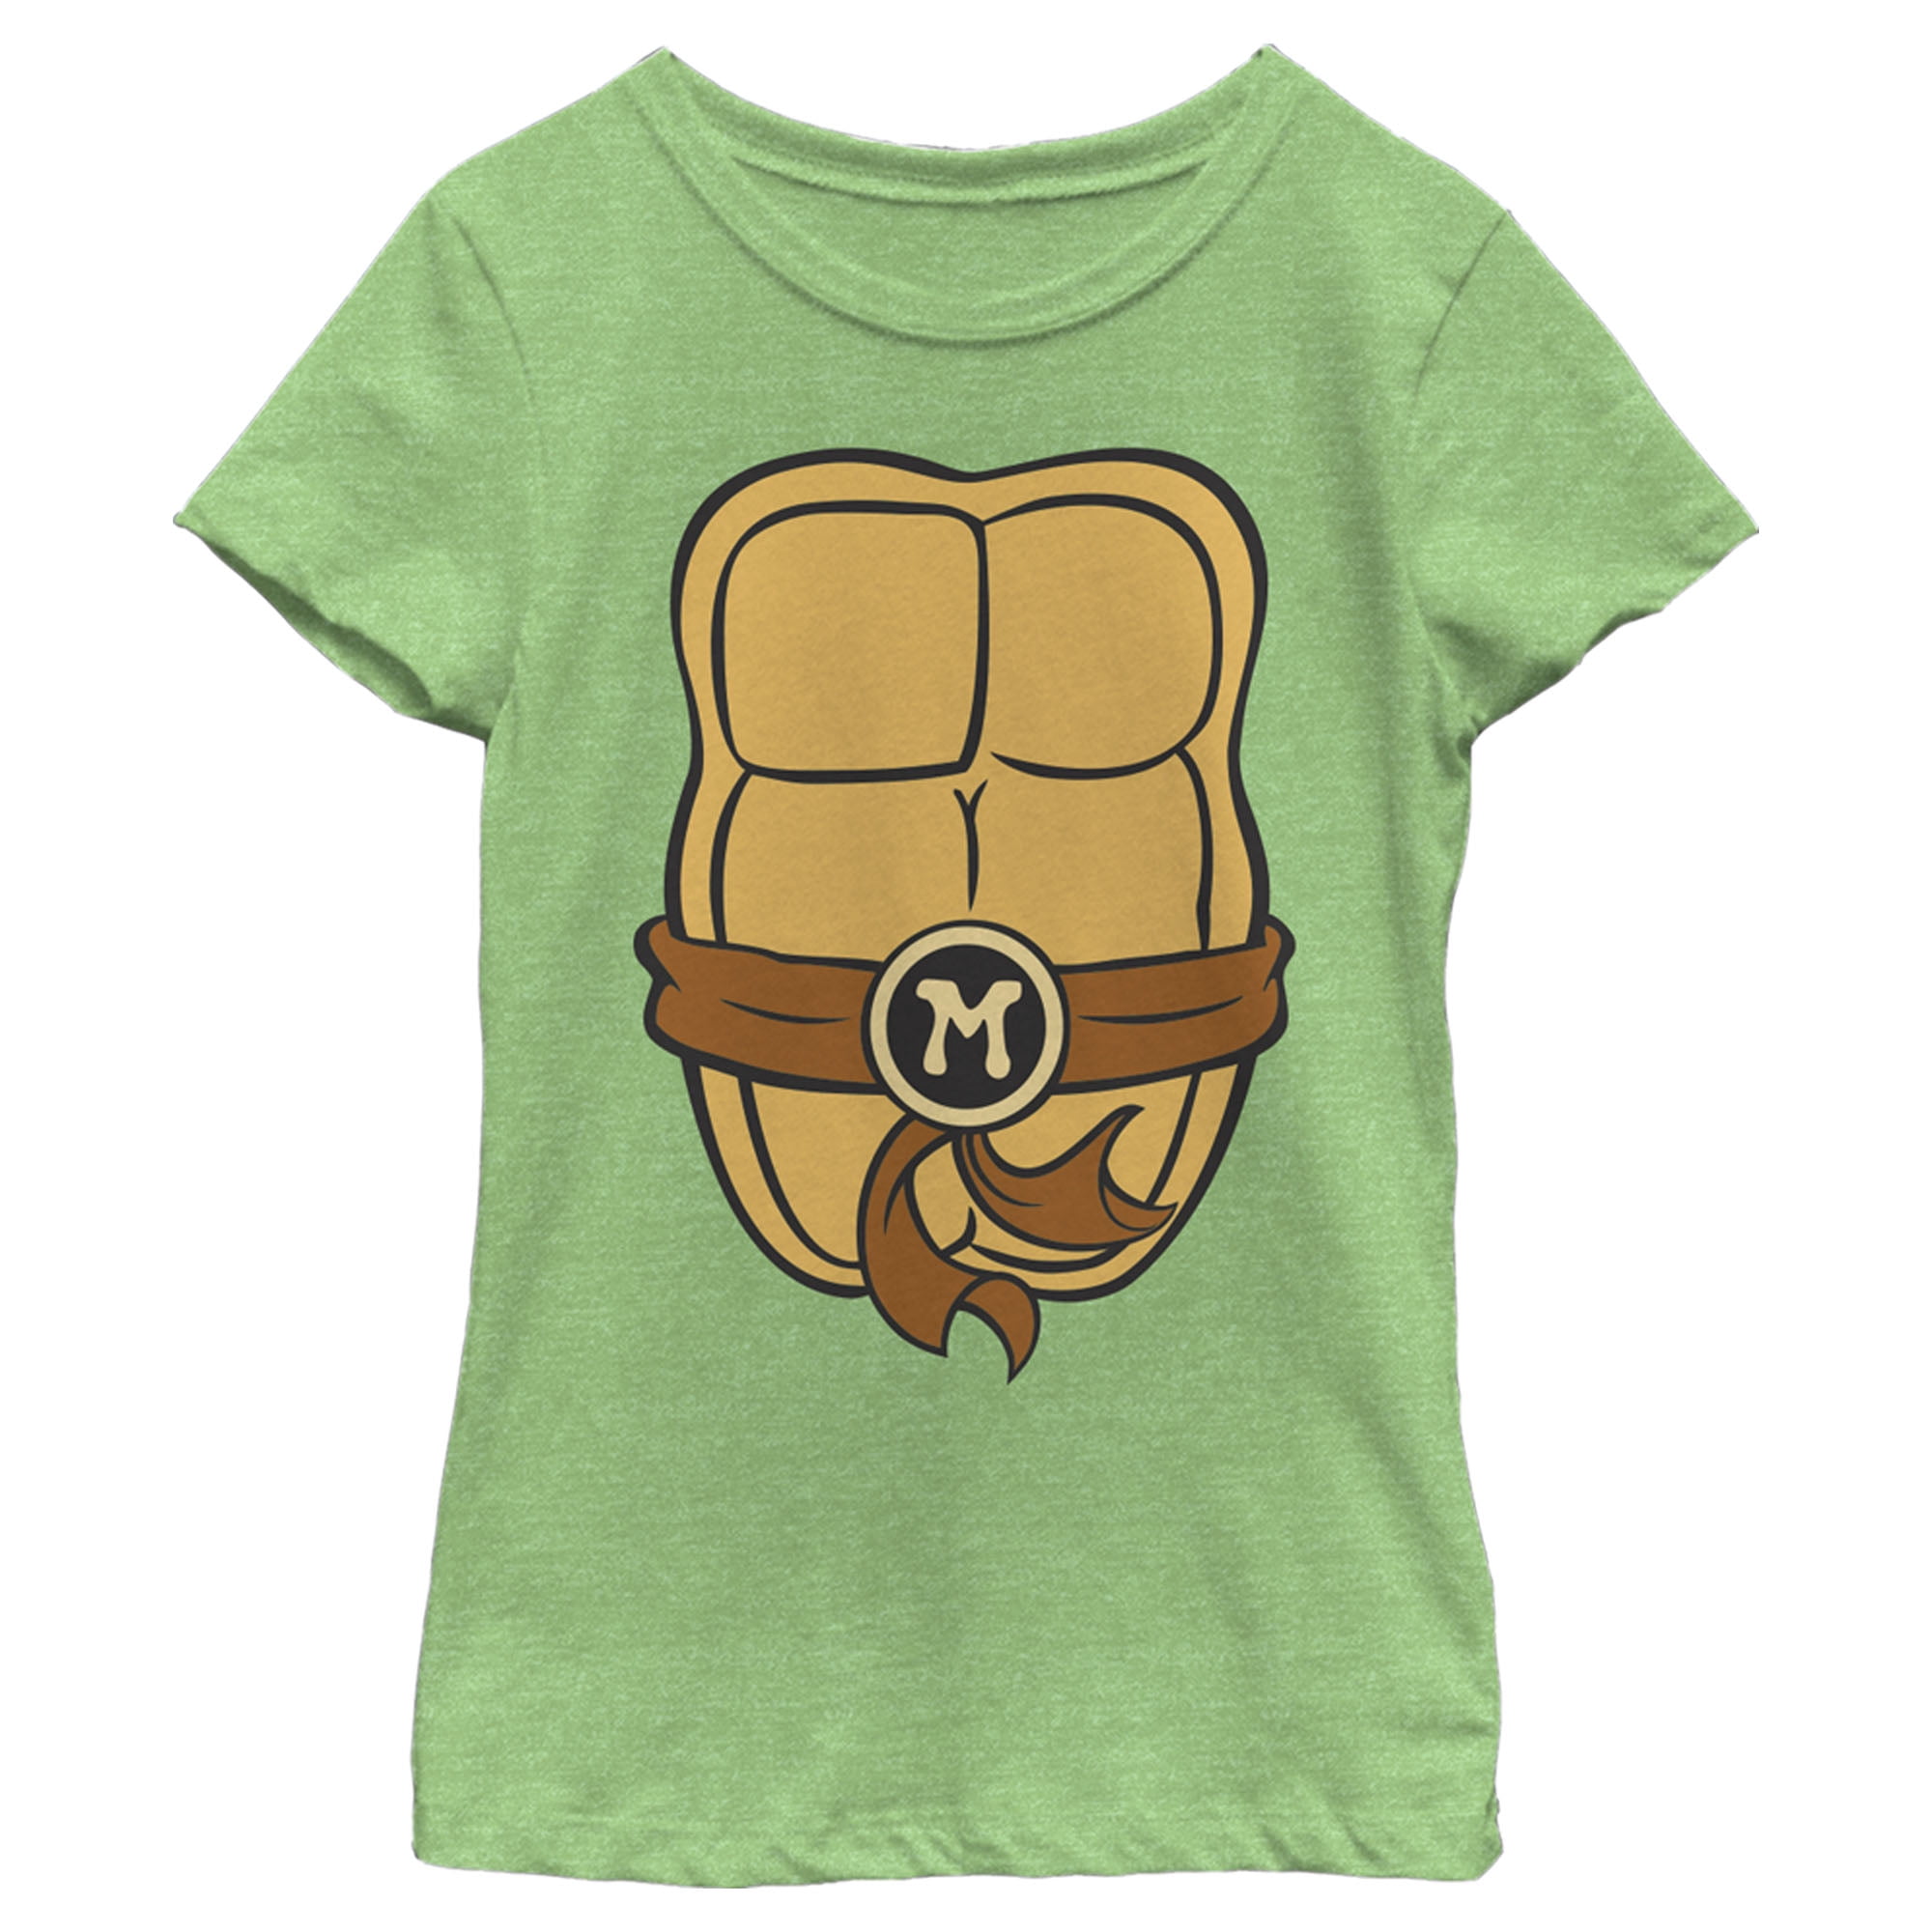 TMNT Michelangelo Face Tee Shirt Green Cotton Orange Mask Graphic Teenage Mutant Ninja Turtles Vintage 2000s T Shirt Adult M Size